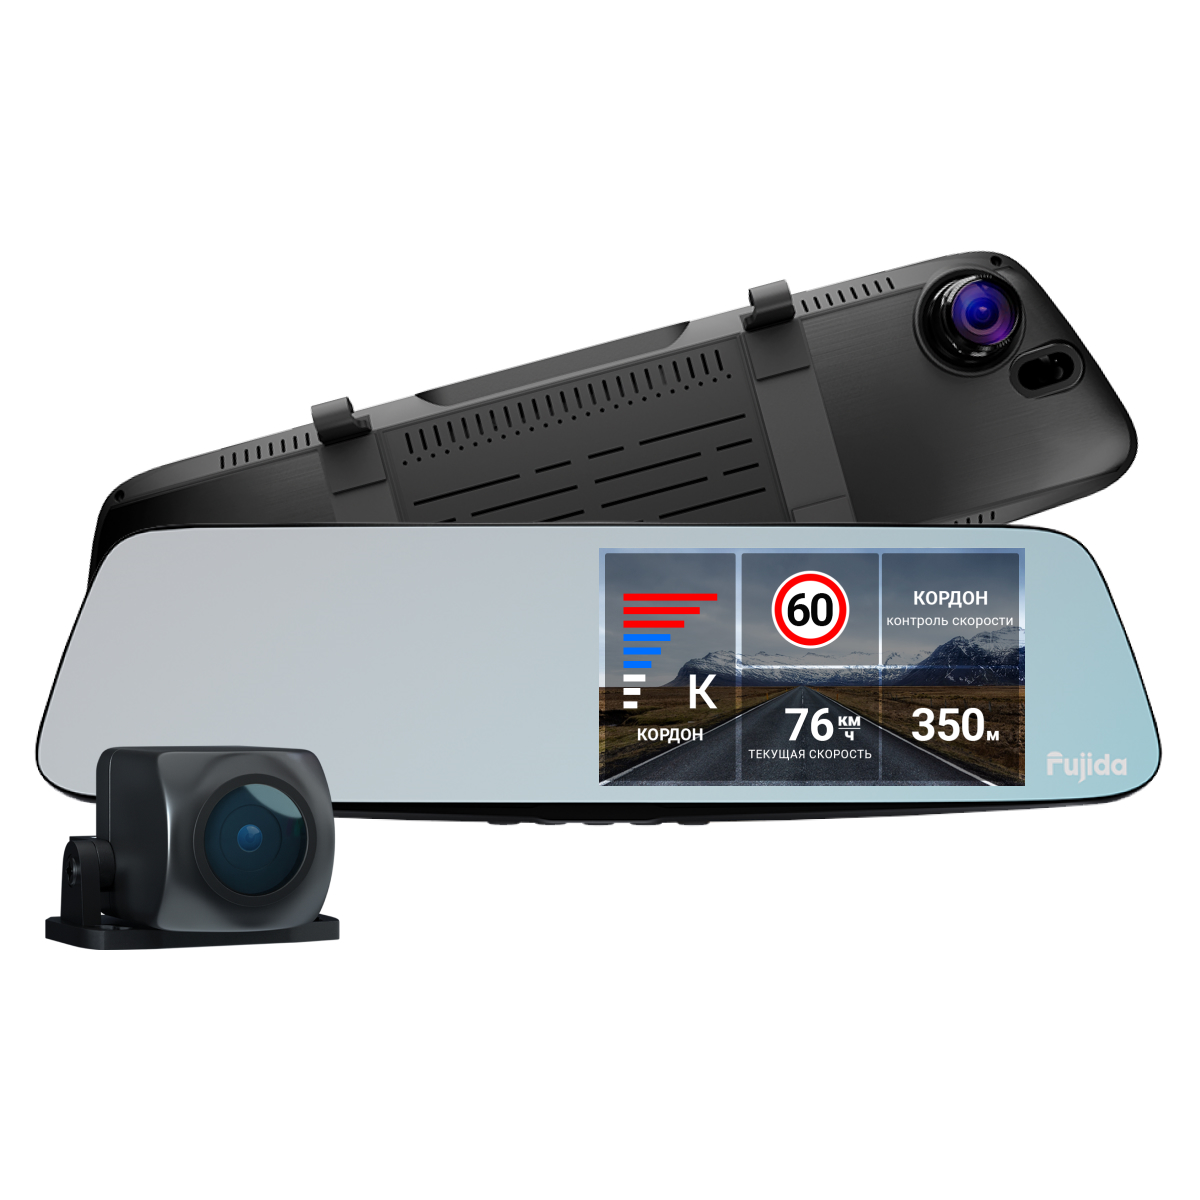 Видеорегистратор зеркало для автомобиля Fujida Karma Blik Duo WiFi с радар-детектором, GPS-информатором, WiFi-модулем и второй камерой